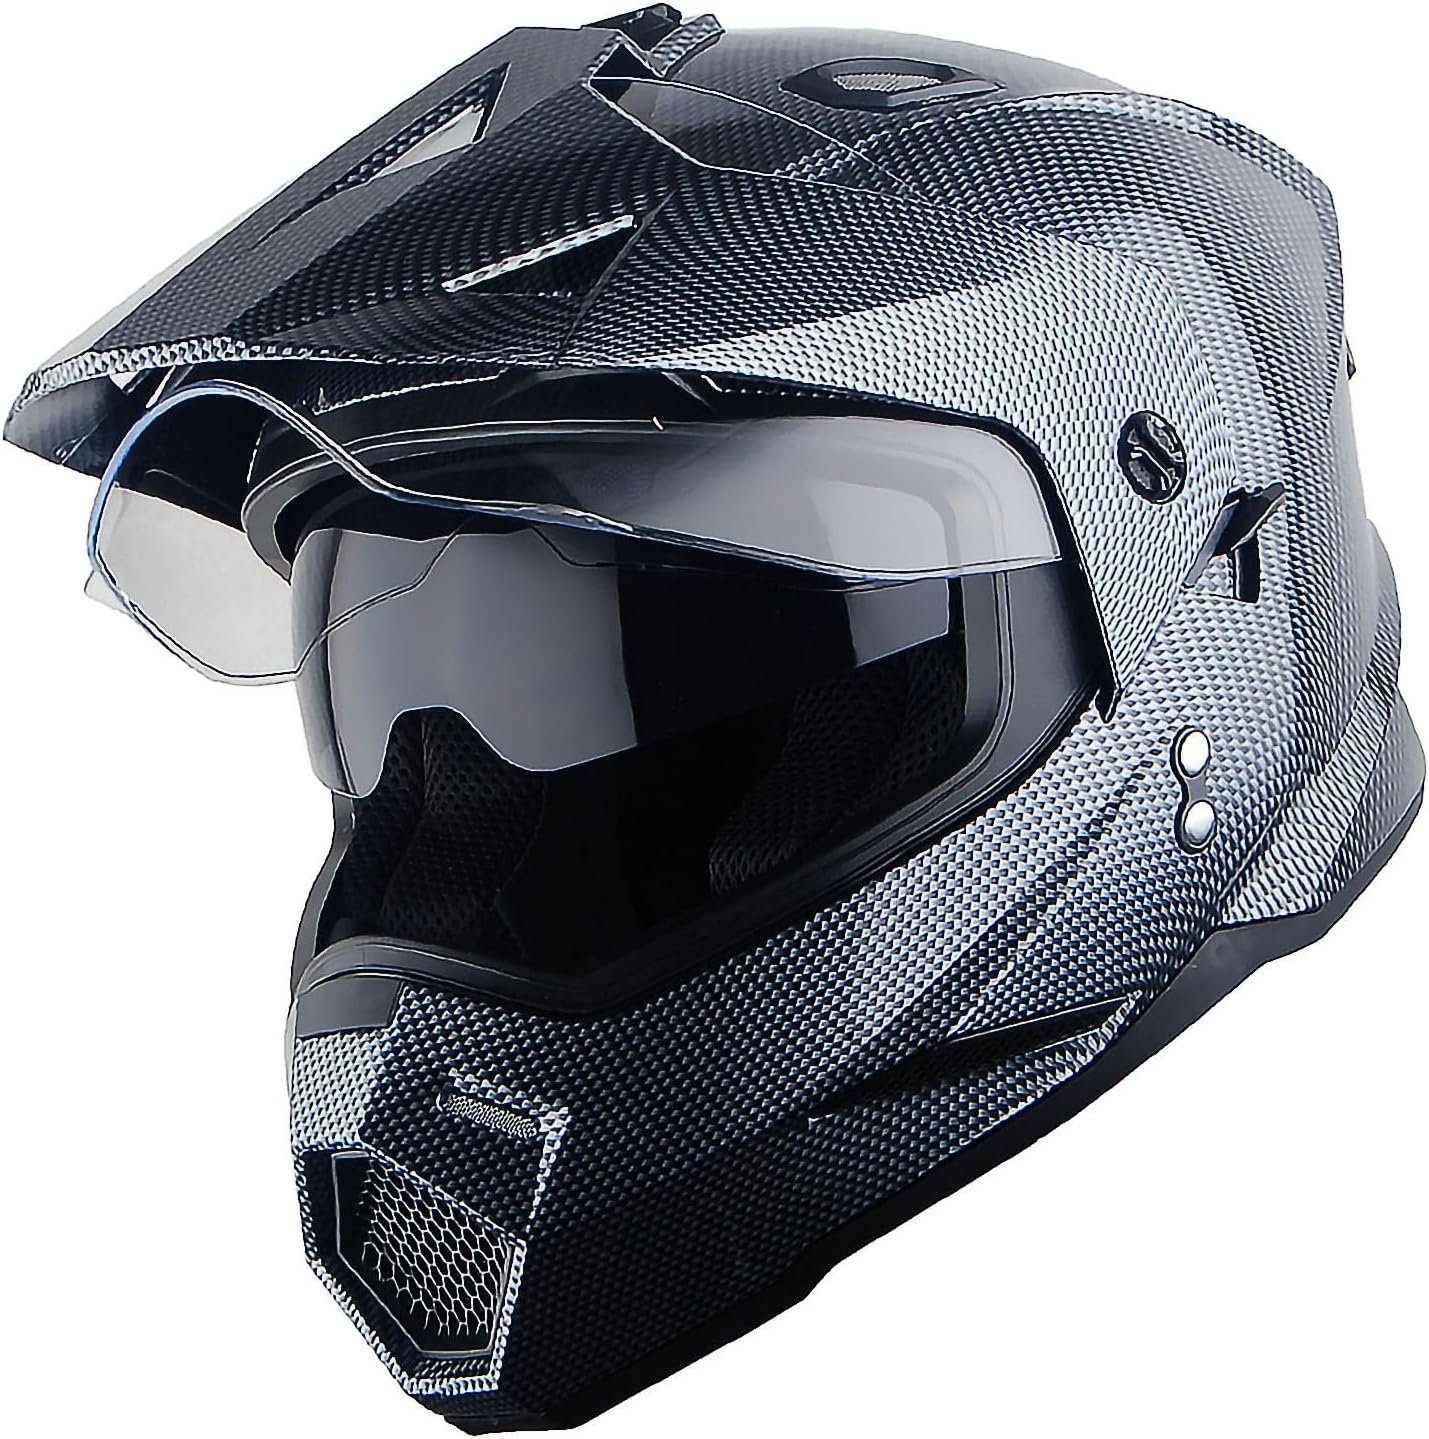 1Storm Dual Sport Motorcycle Helmet Review